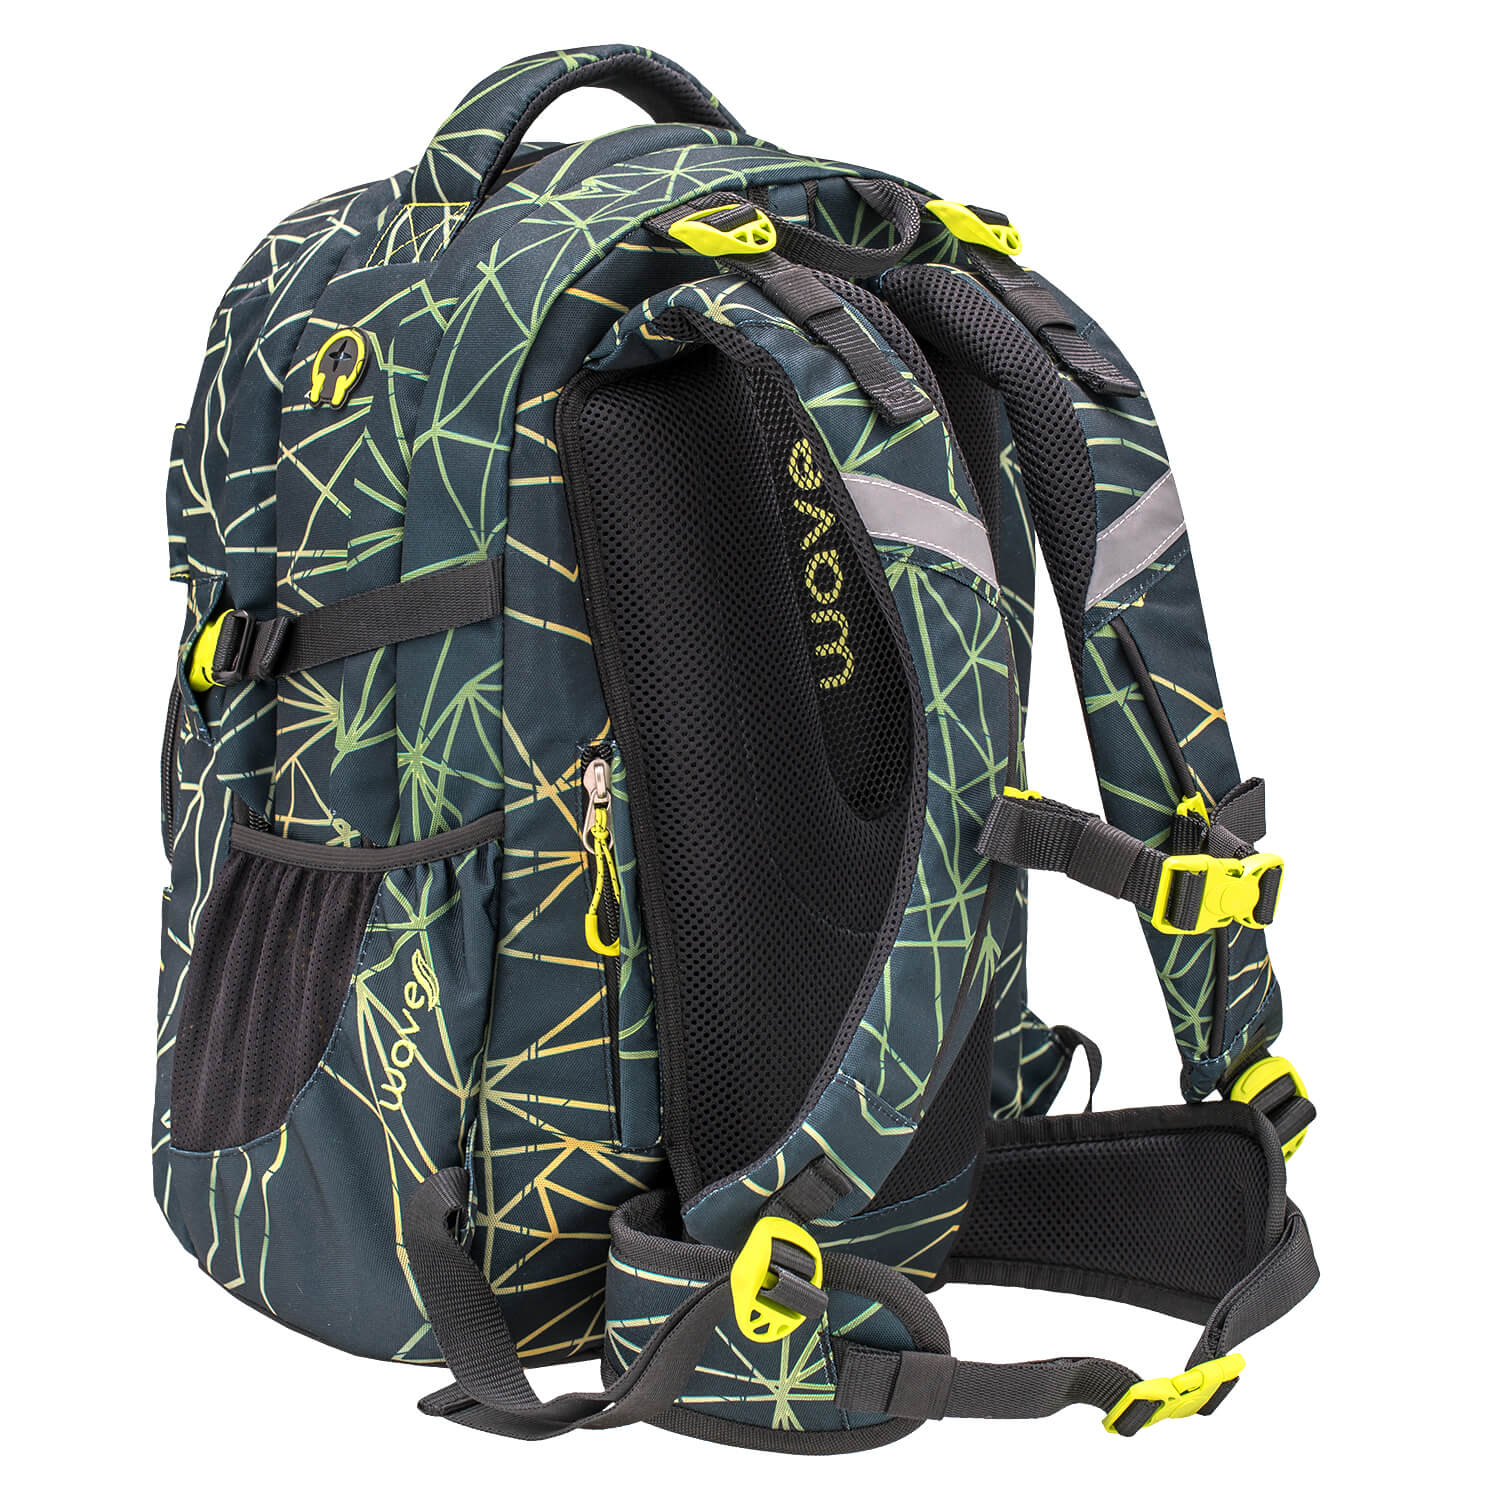 Wave Infinity Stripes Green school backpack Set 3 Pcs